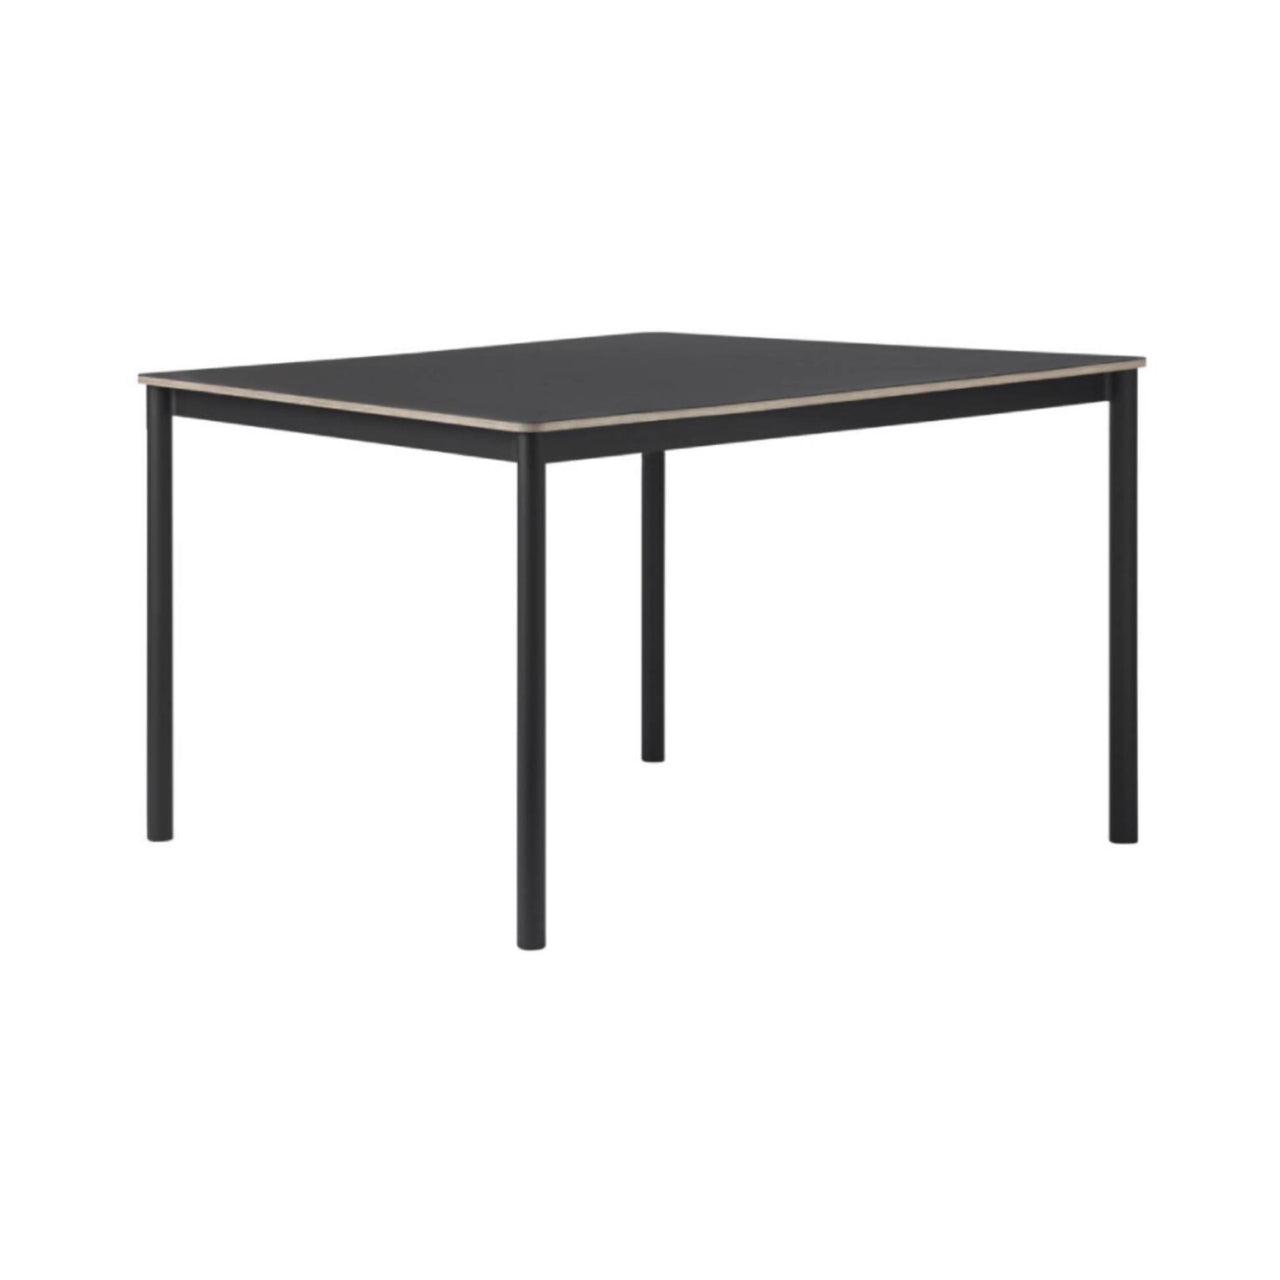 Base Table: Small + Black Linoleum + Plywood Edge + Black